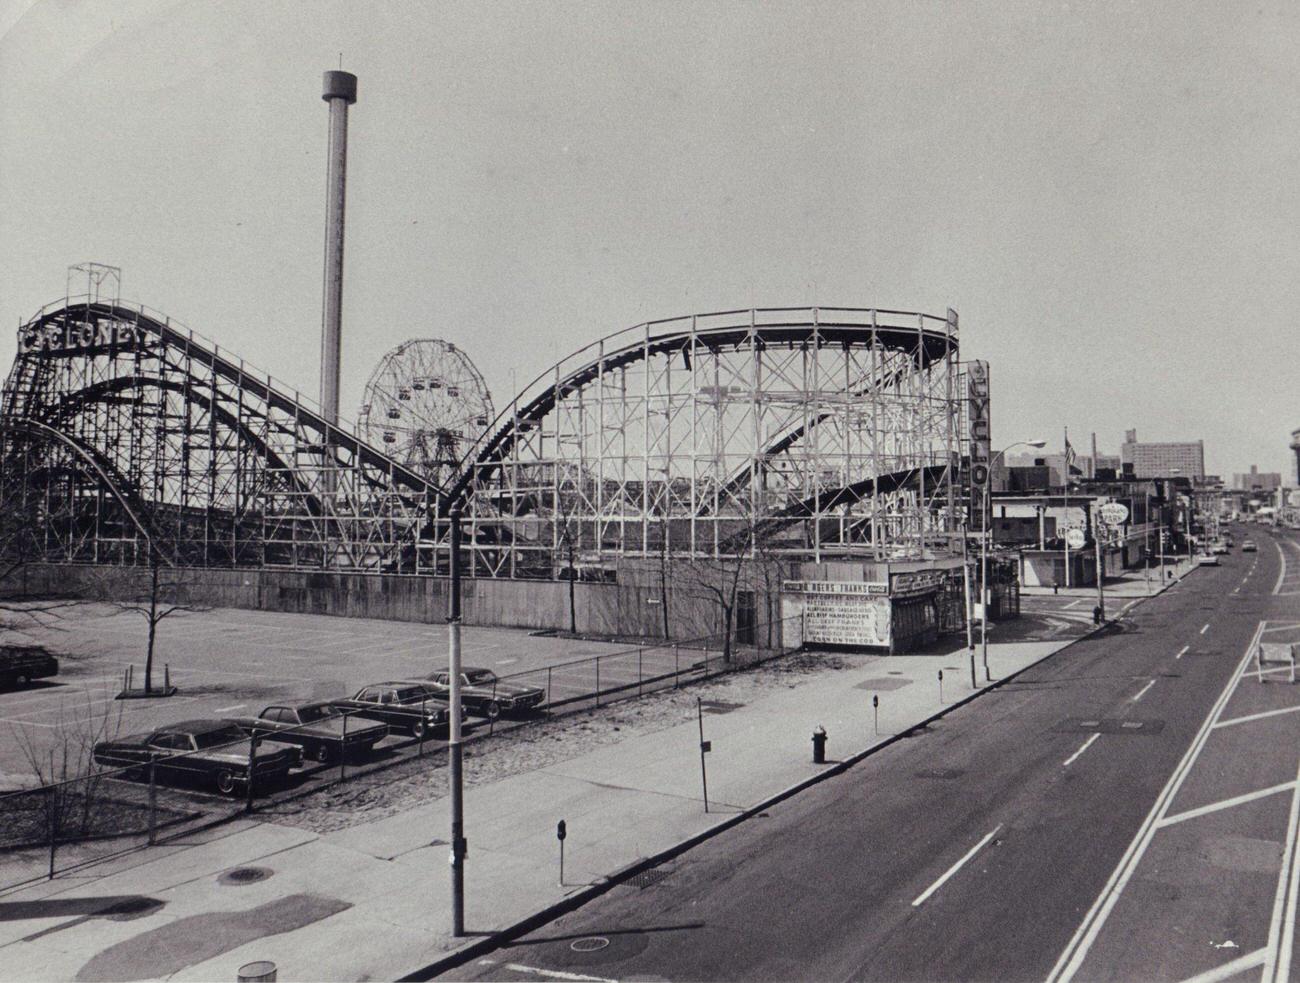 Surf Avenue In Coney Island With Cyclone Roller Coaster And Wonder Wheel, Brooklyn, 1975.